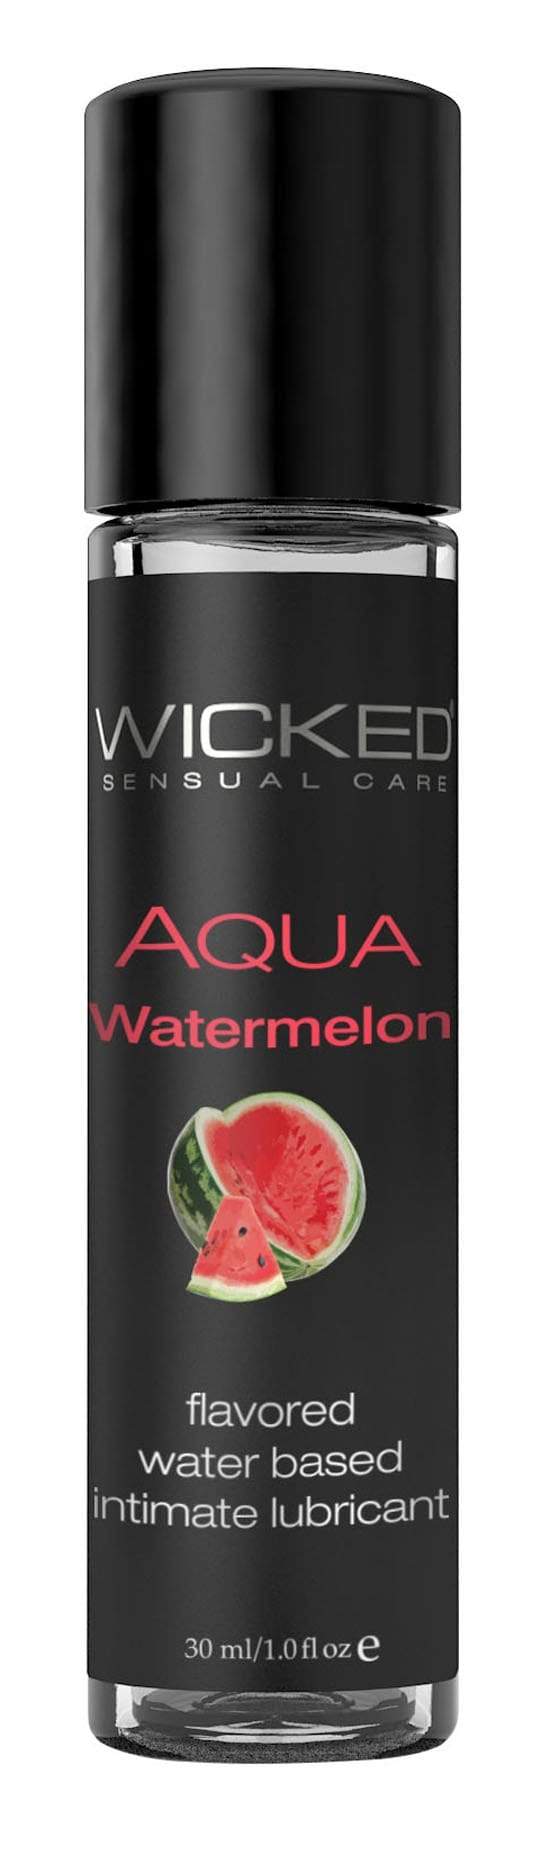 aqua watermelon water based lubricant 1 oz